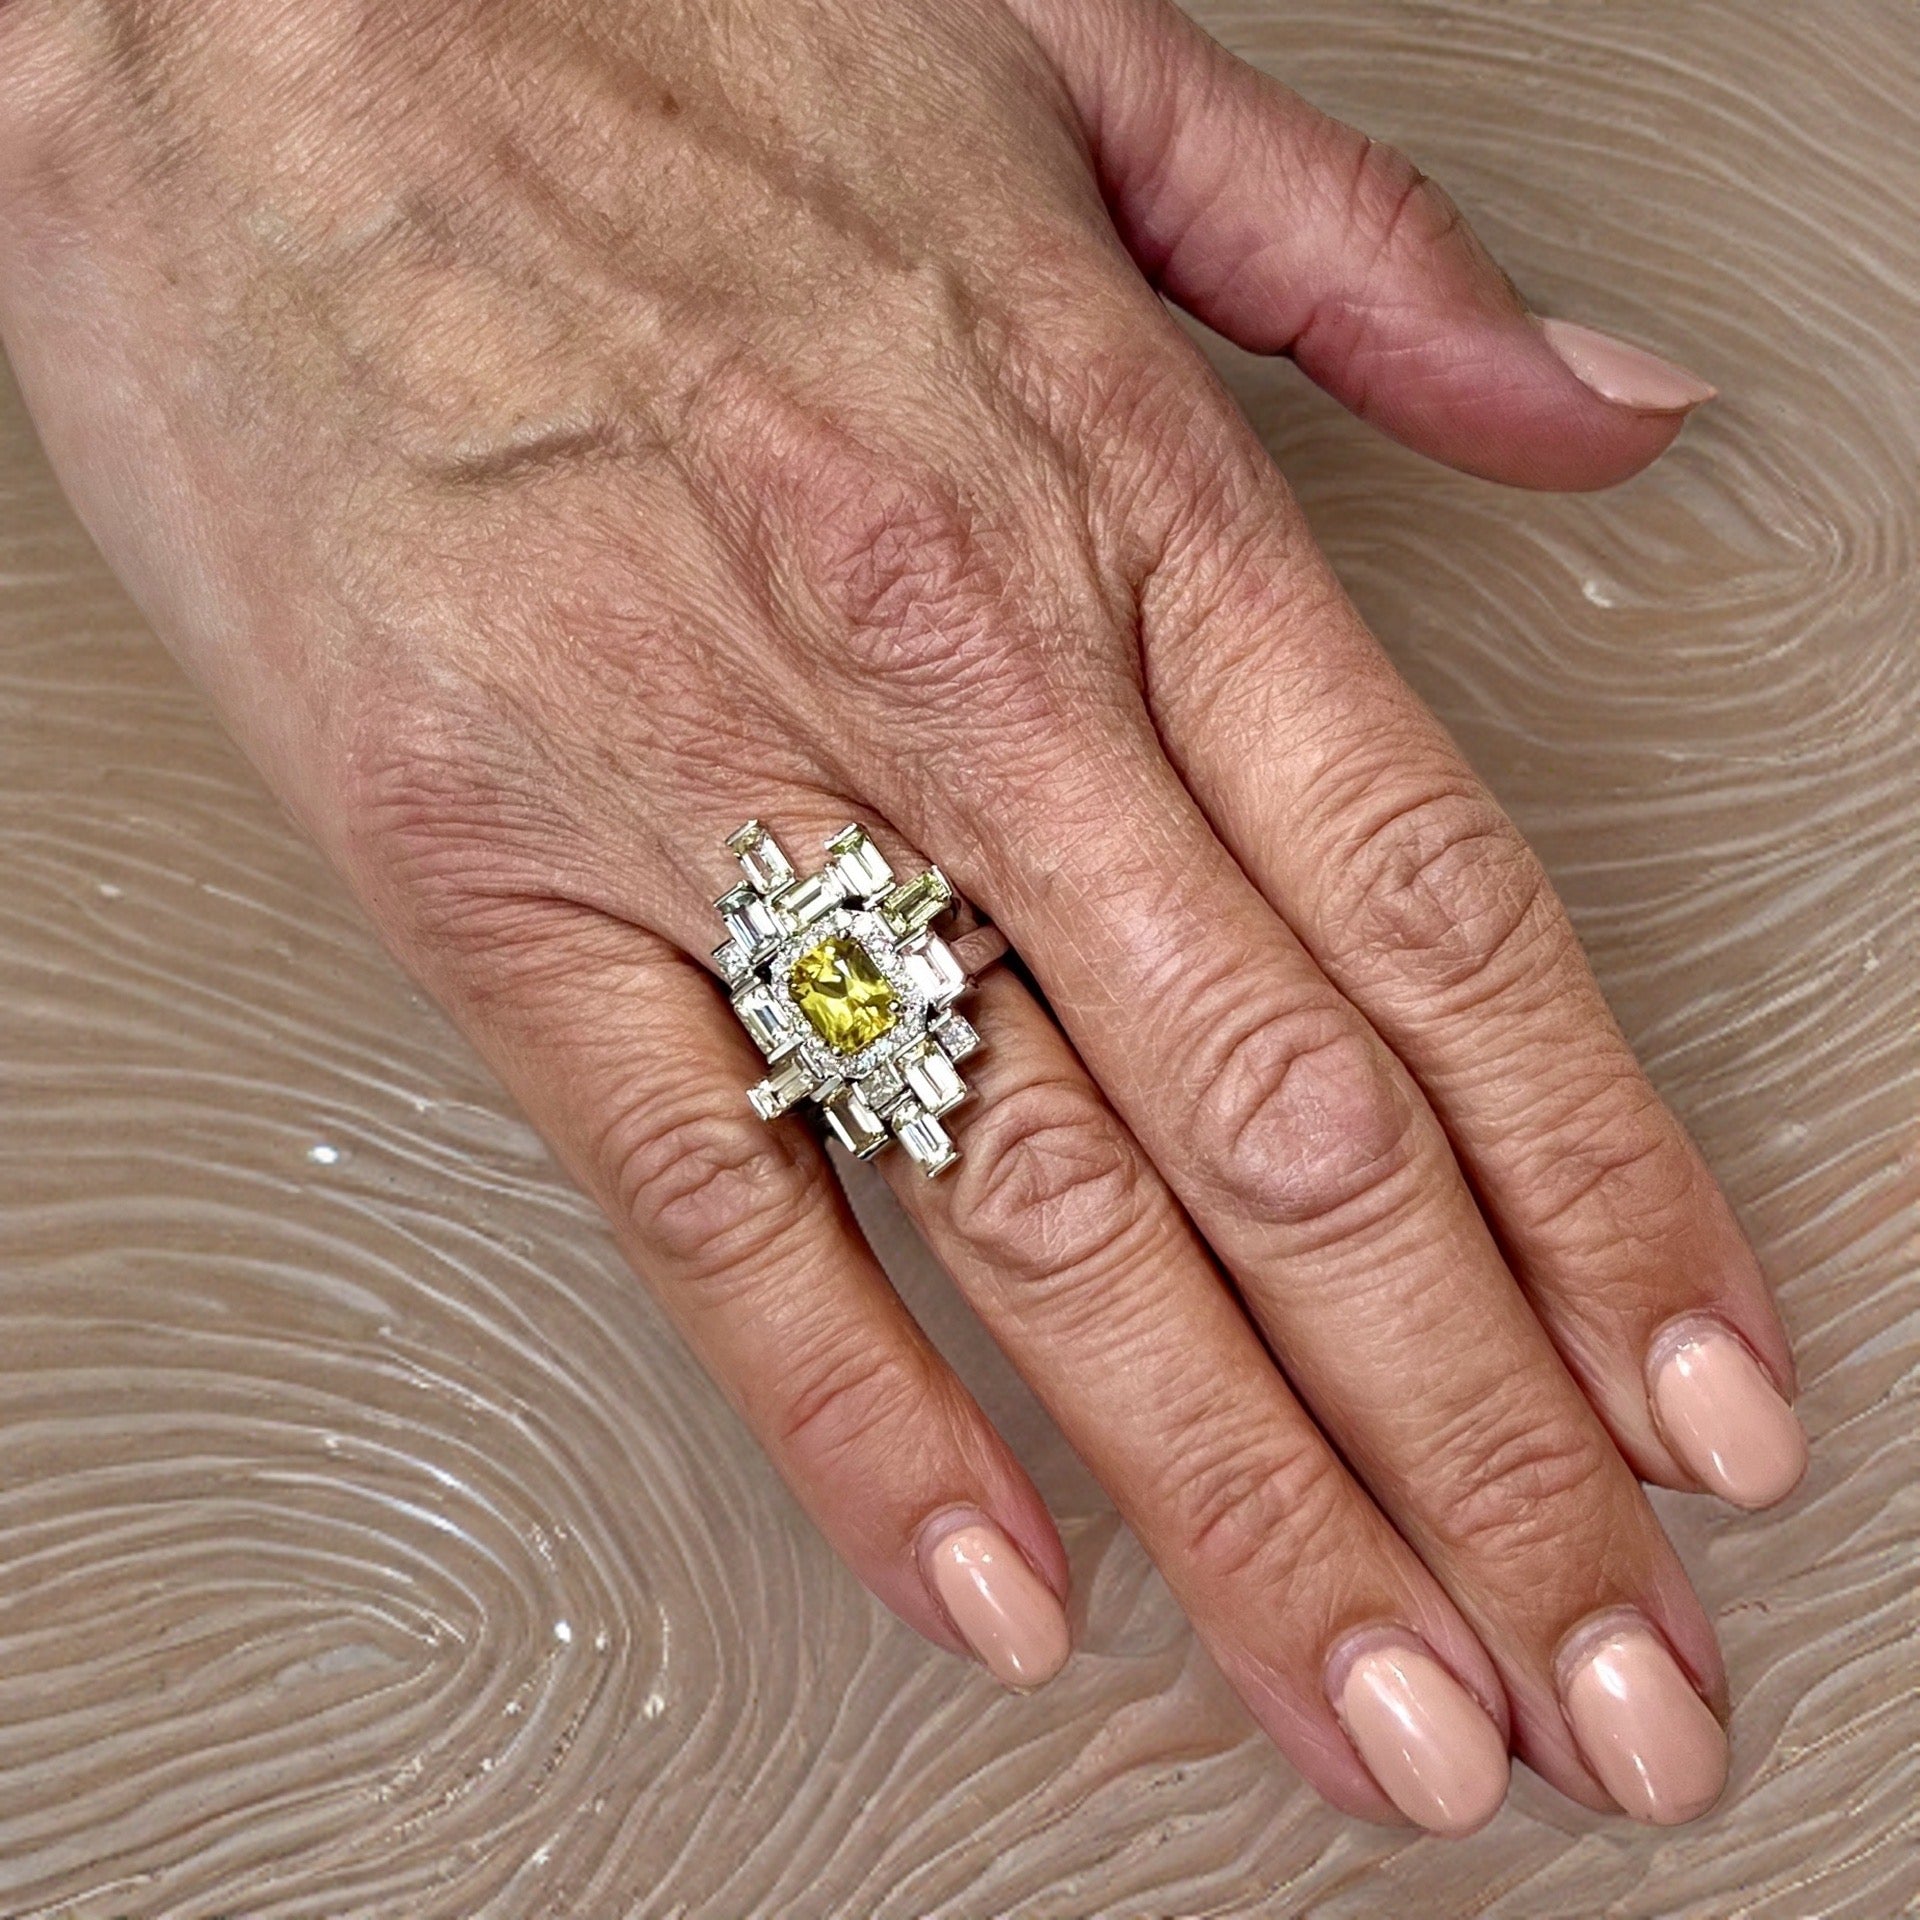 Natural Sapphire Diamond Ring 6.75 14k W Gold 13.3 TCW Certified $7,975 301438 - Certified Fine Jewelry